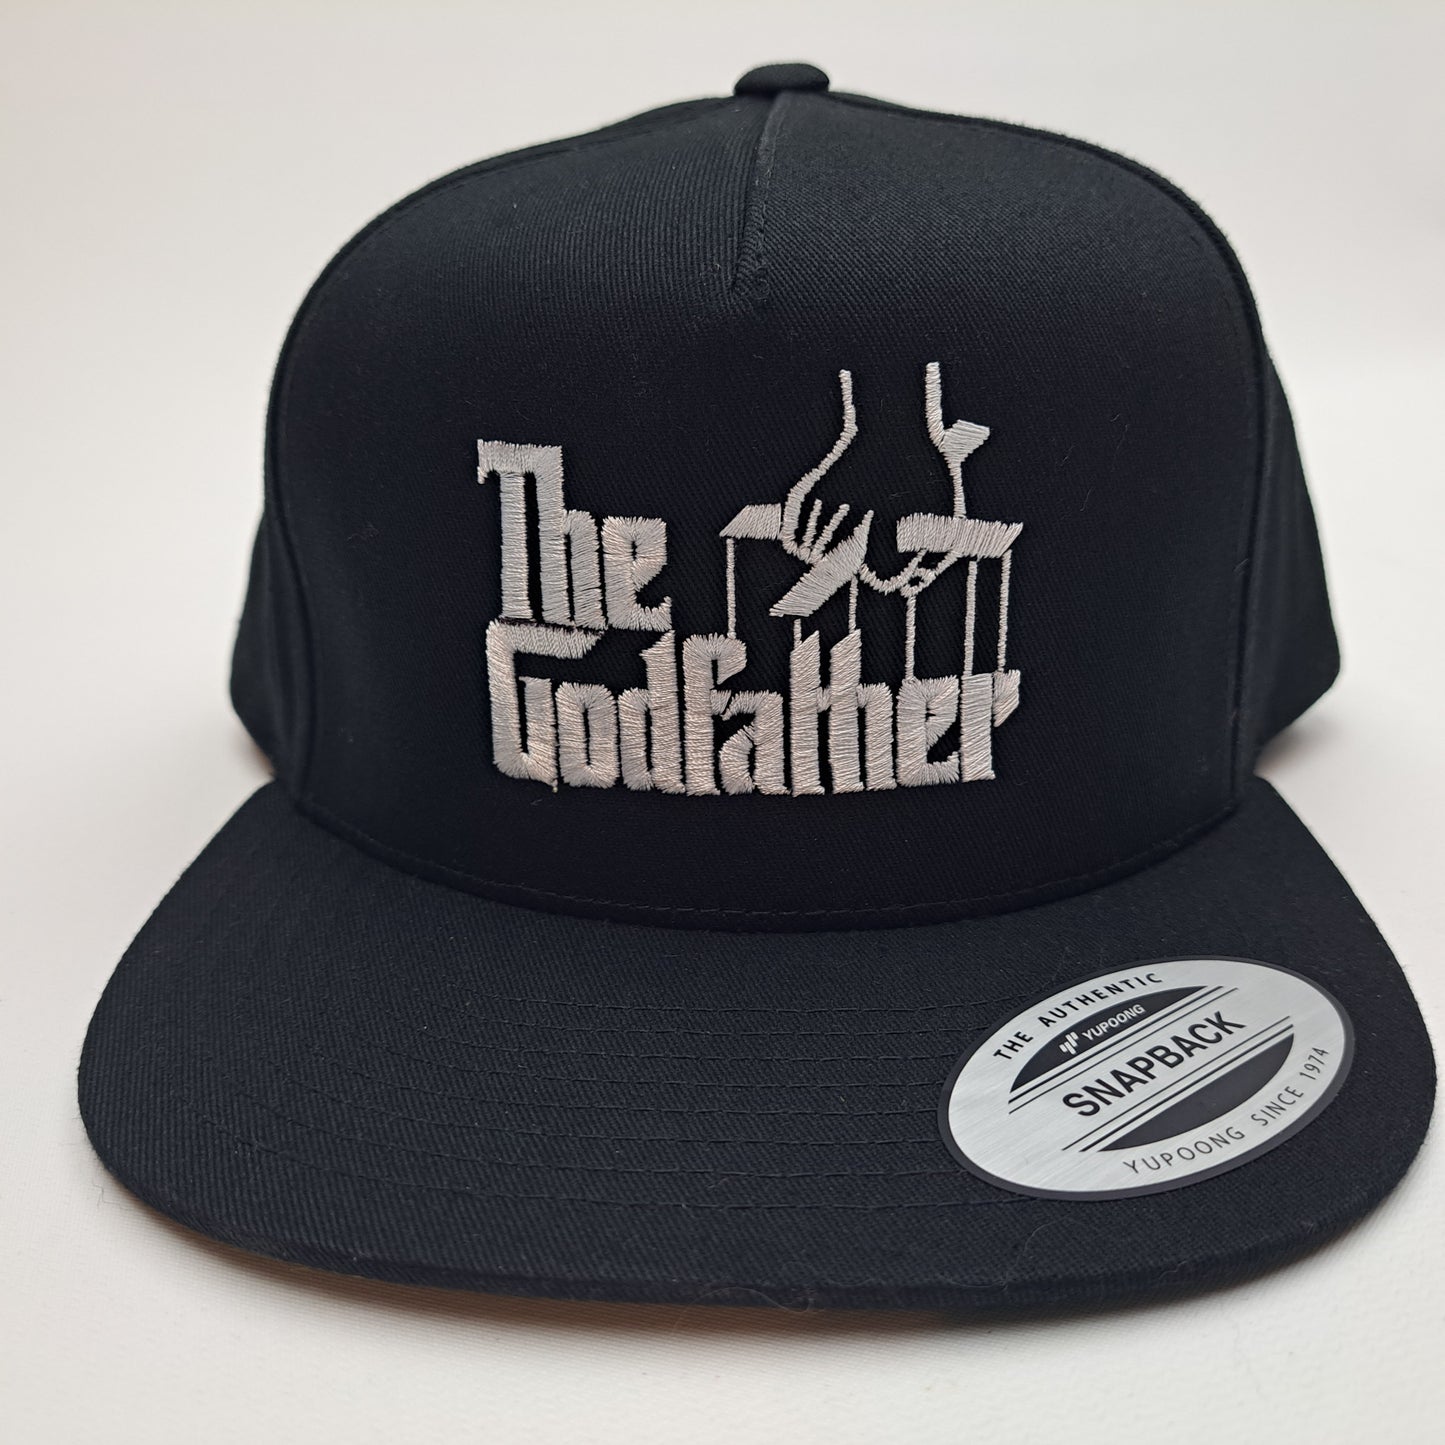 The Godfather Flat Bill Brim Vintage Trucker Style Snapback Hat Cap Black